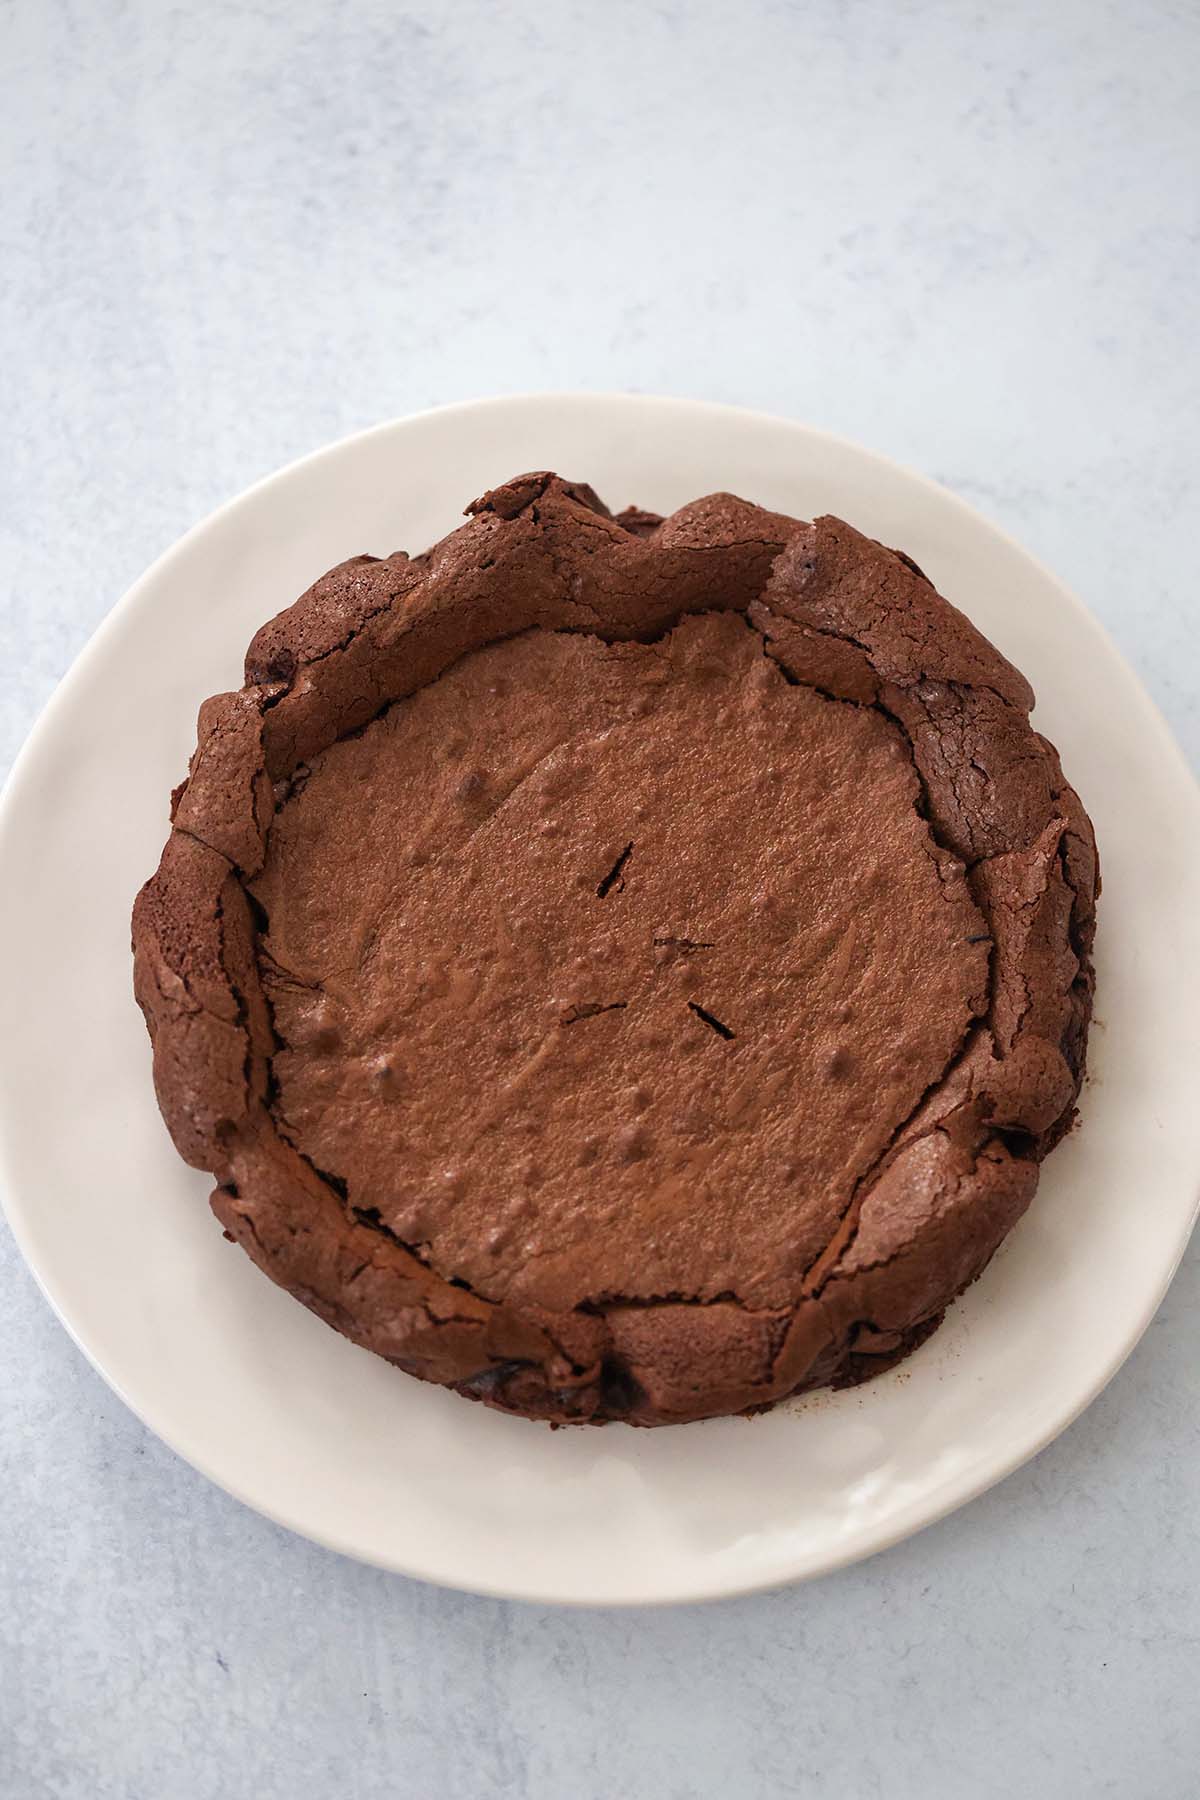 cracked flourless chocolate cake without ganache. 